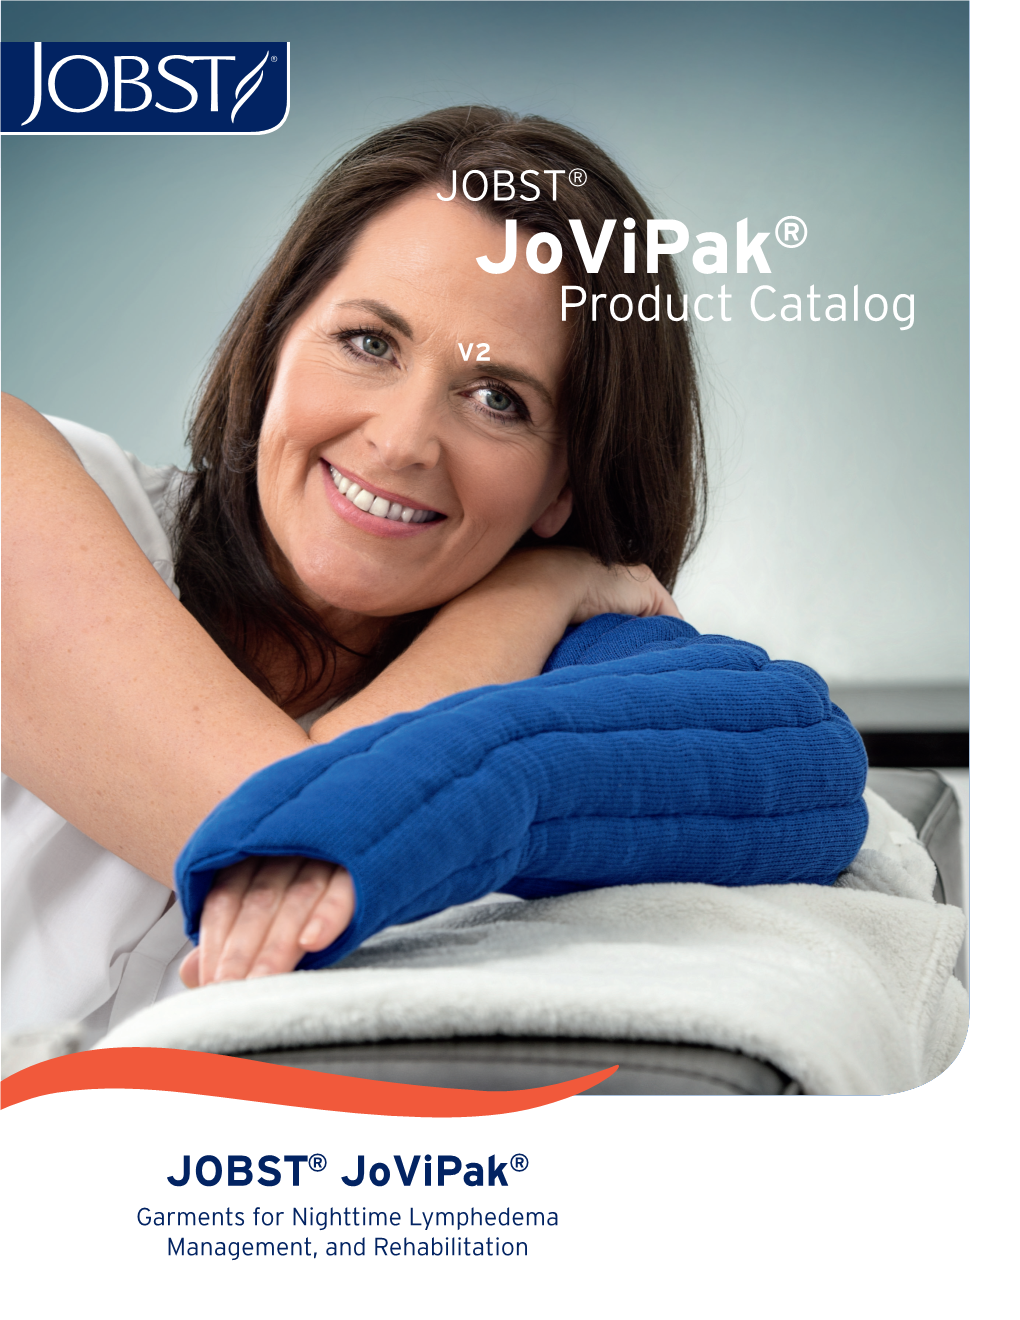 Jovipak® Product Catalog V2